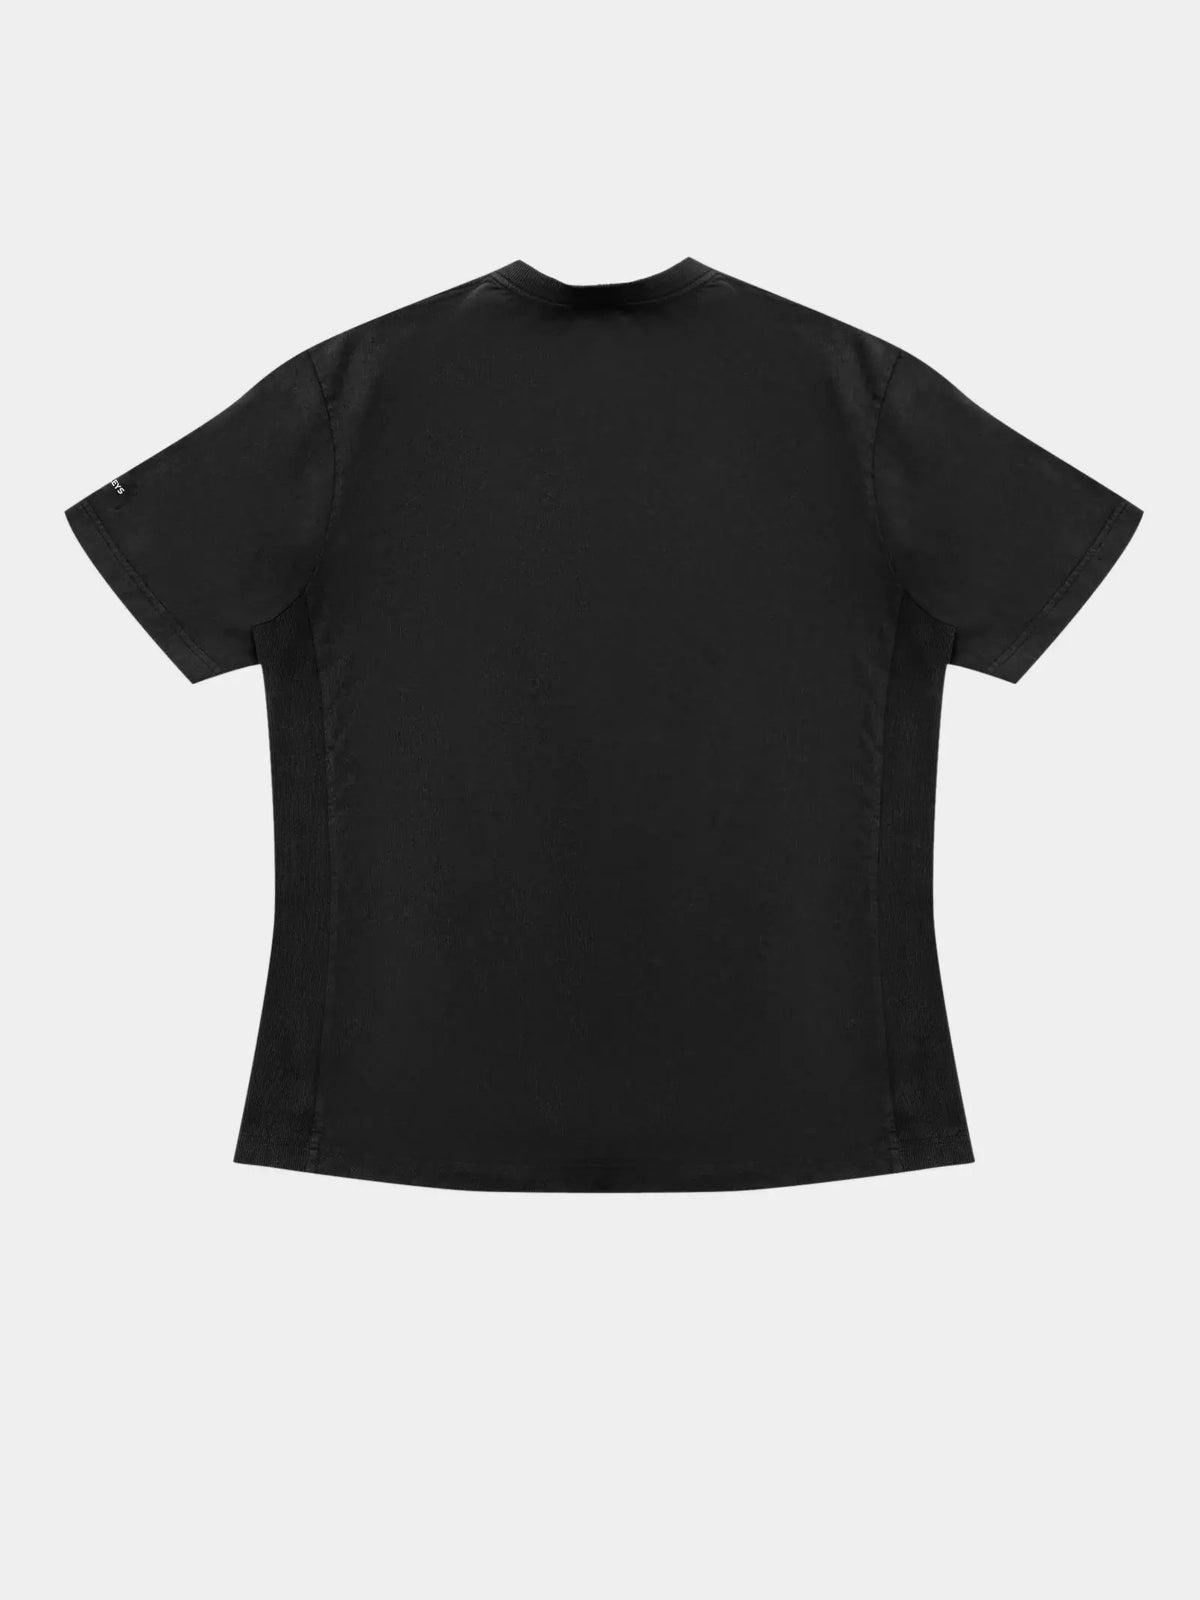 Micro Staple T-Shirt in Black Acid